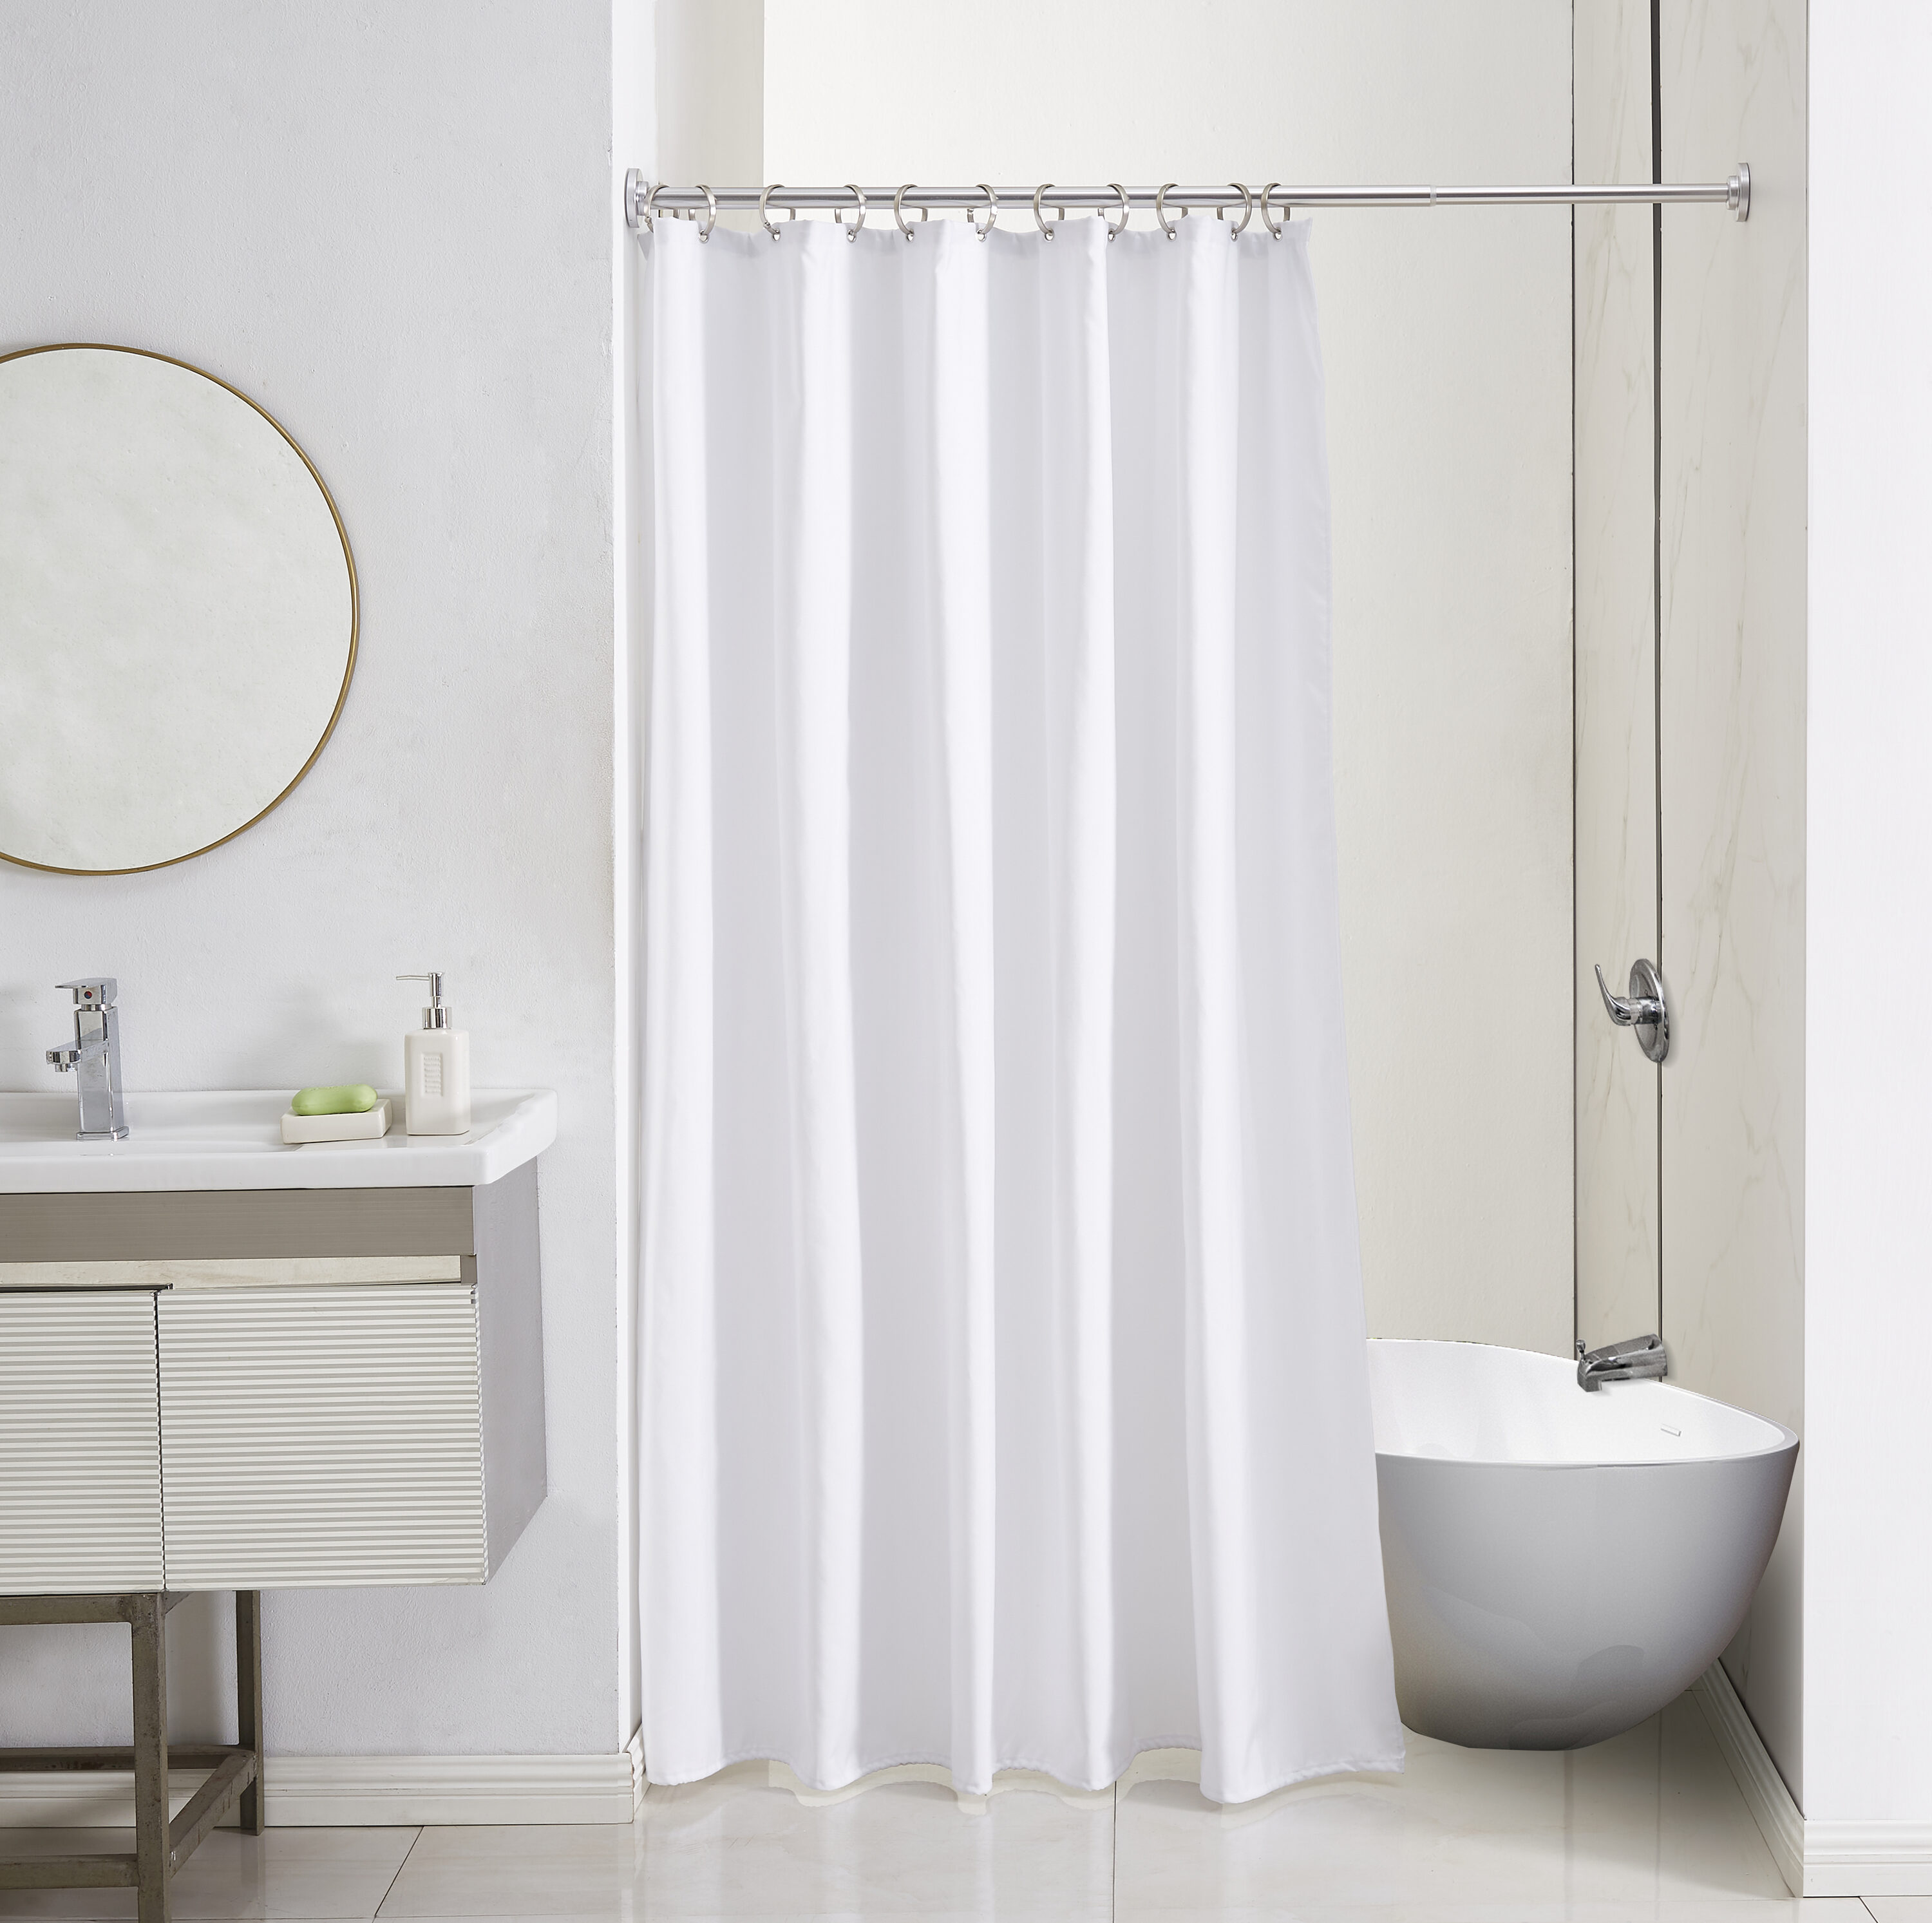 Shower Caddy, Satin Nickel, 1 Caddy, 4 Water Resistant Strips, Bathroom  Organization - AliExpress